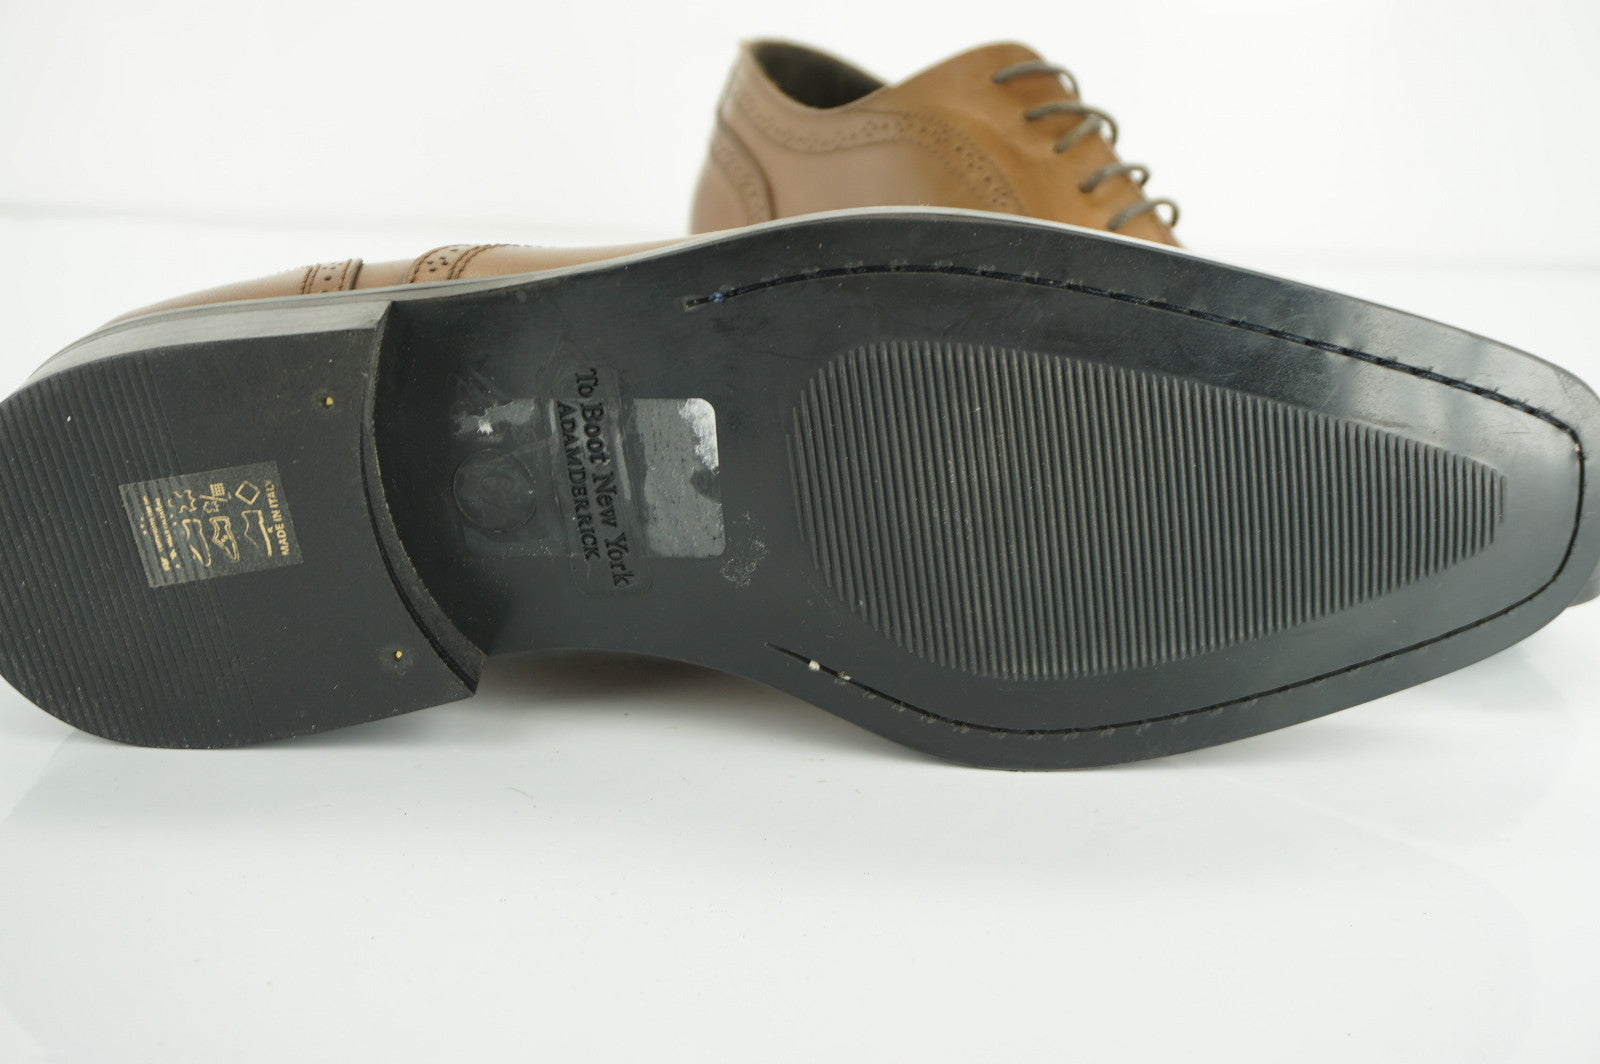 To Boot New York Brown Clarke Oxfords Shoes size 10.5 M Men's NIB Adam Derrick